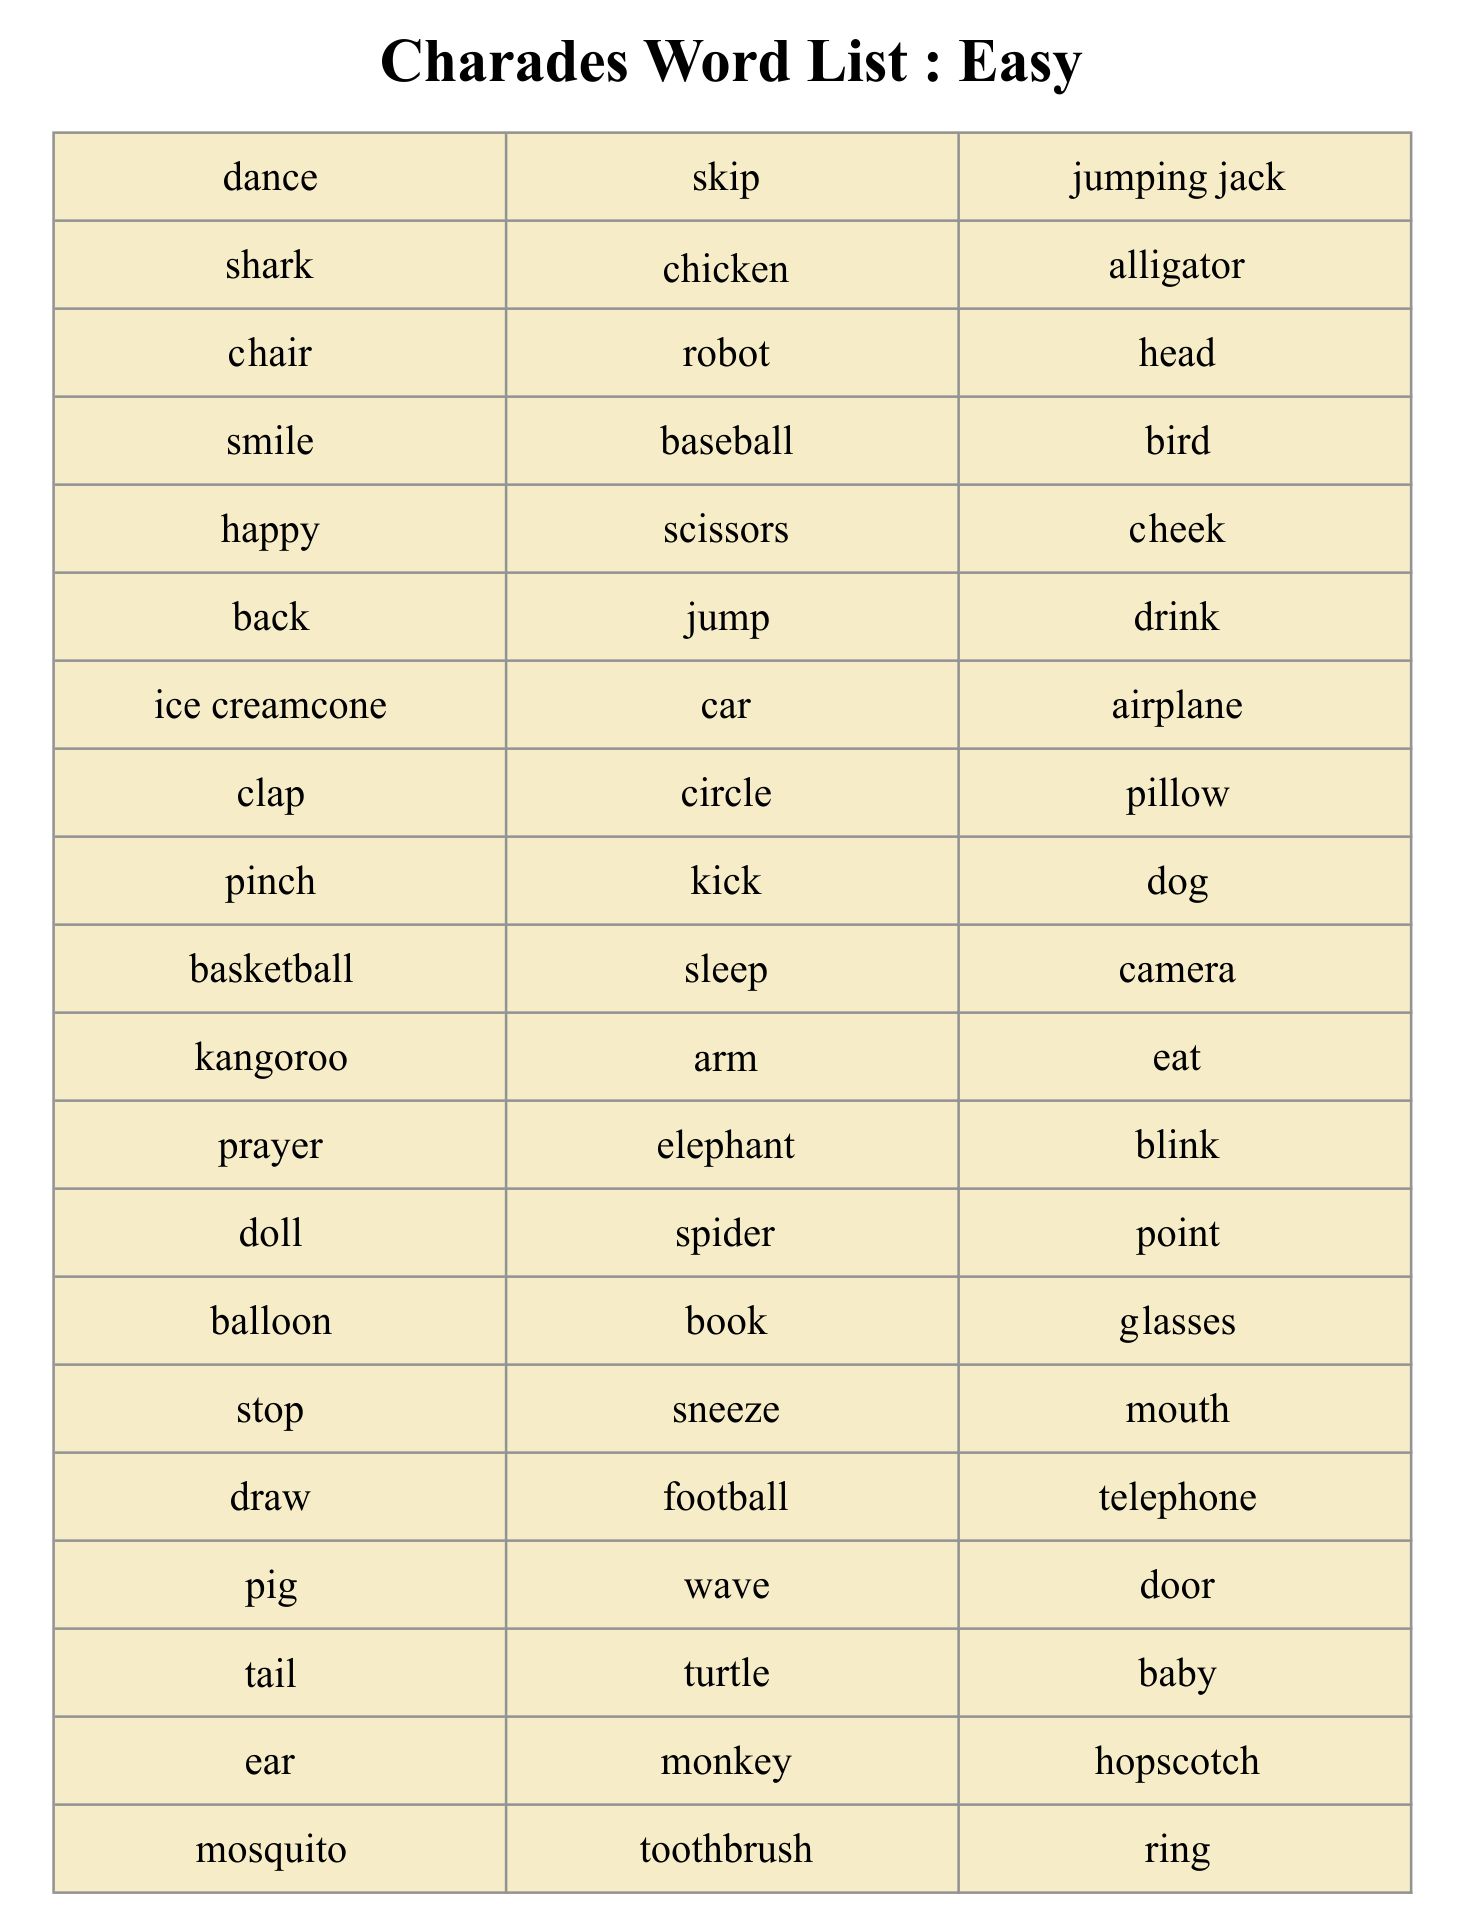 charades-words-list-printable-game